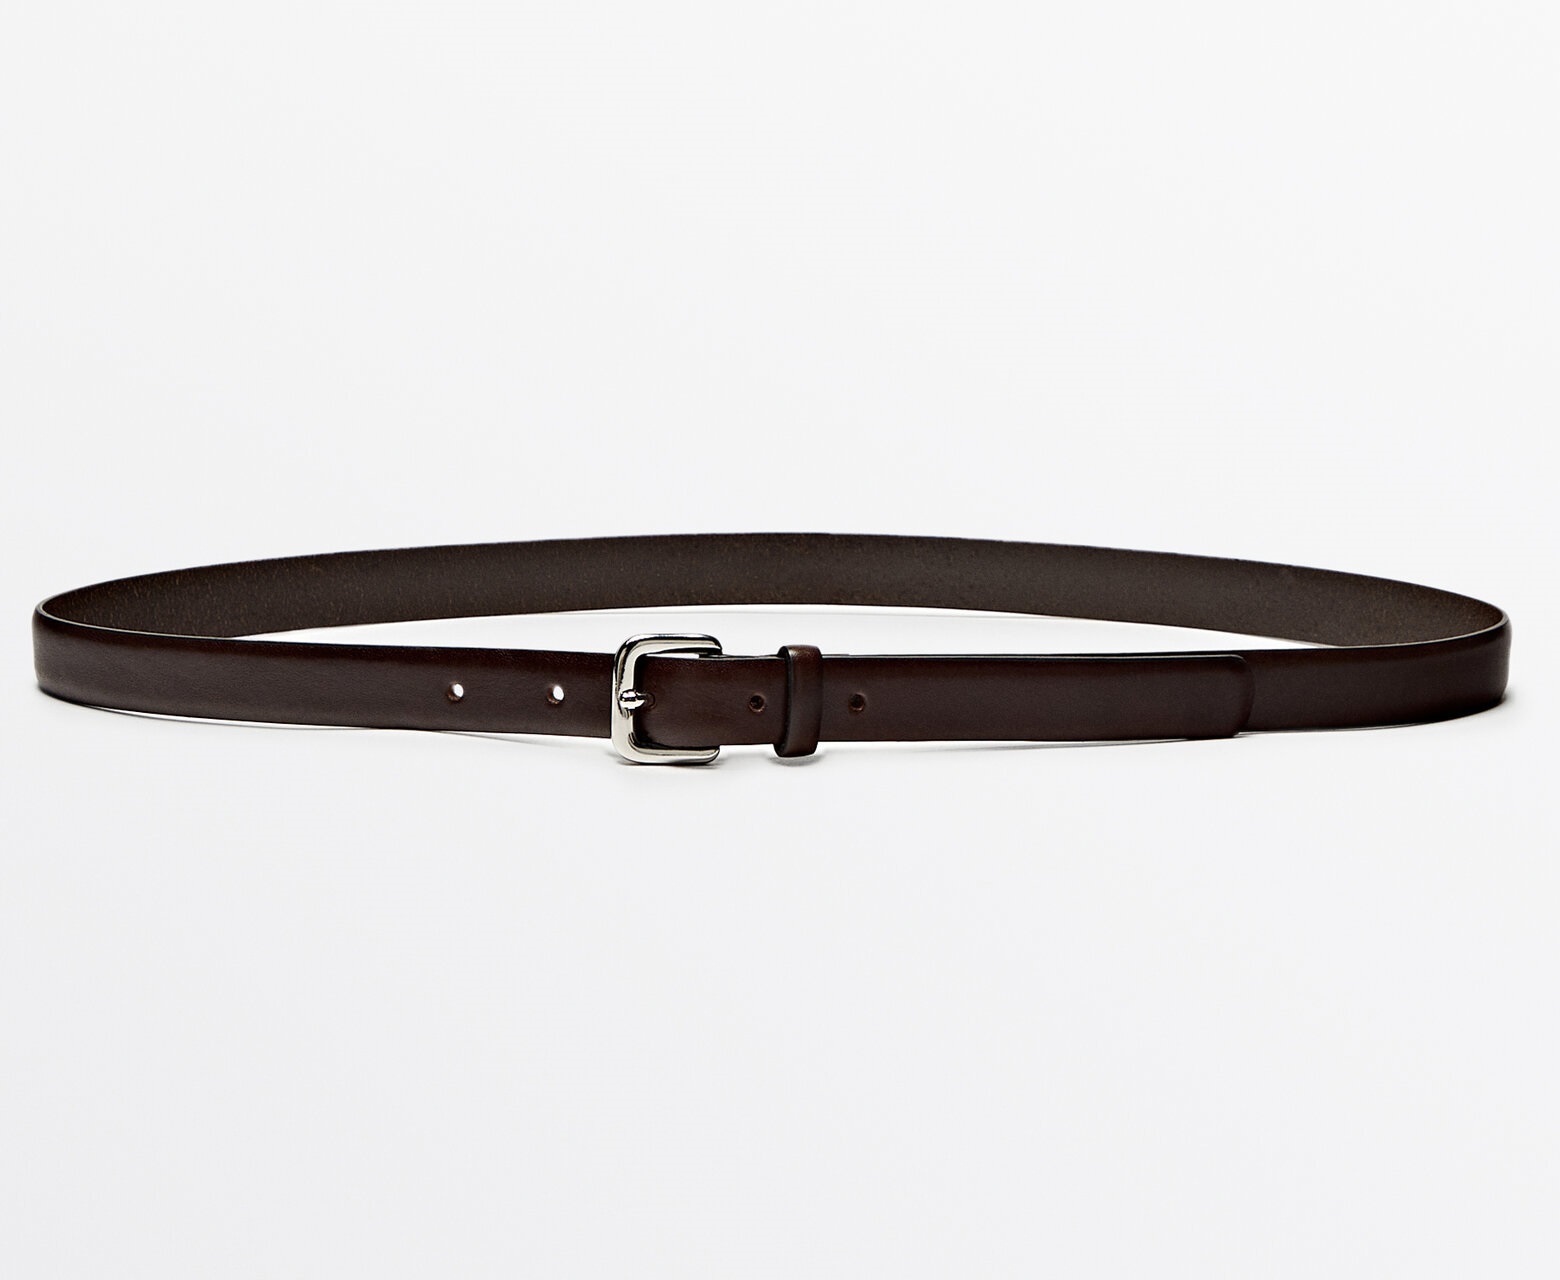 Ремень Massimo Dutti Leather With Square Buckle, коричневый ремень massimo dutti braided leather коричневый